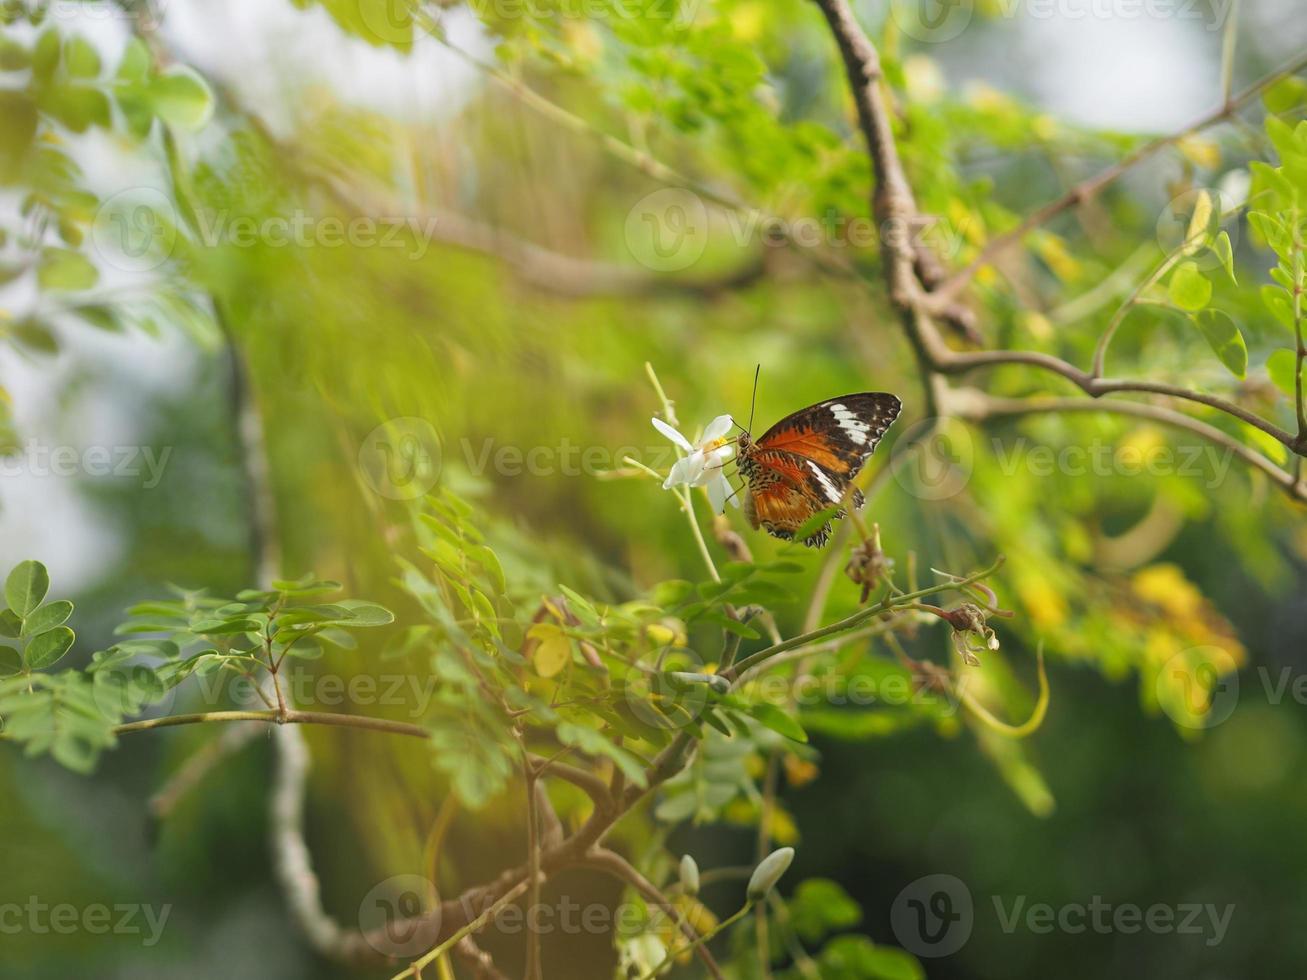 borboleta estava bebendo néctar ao lado da árvore de baqueta de flor de vespa, animal inseto foto